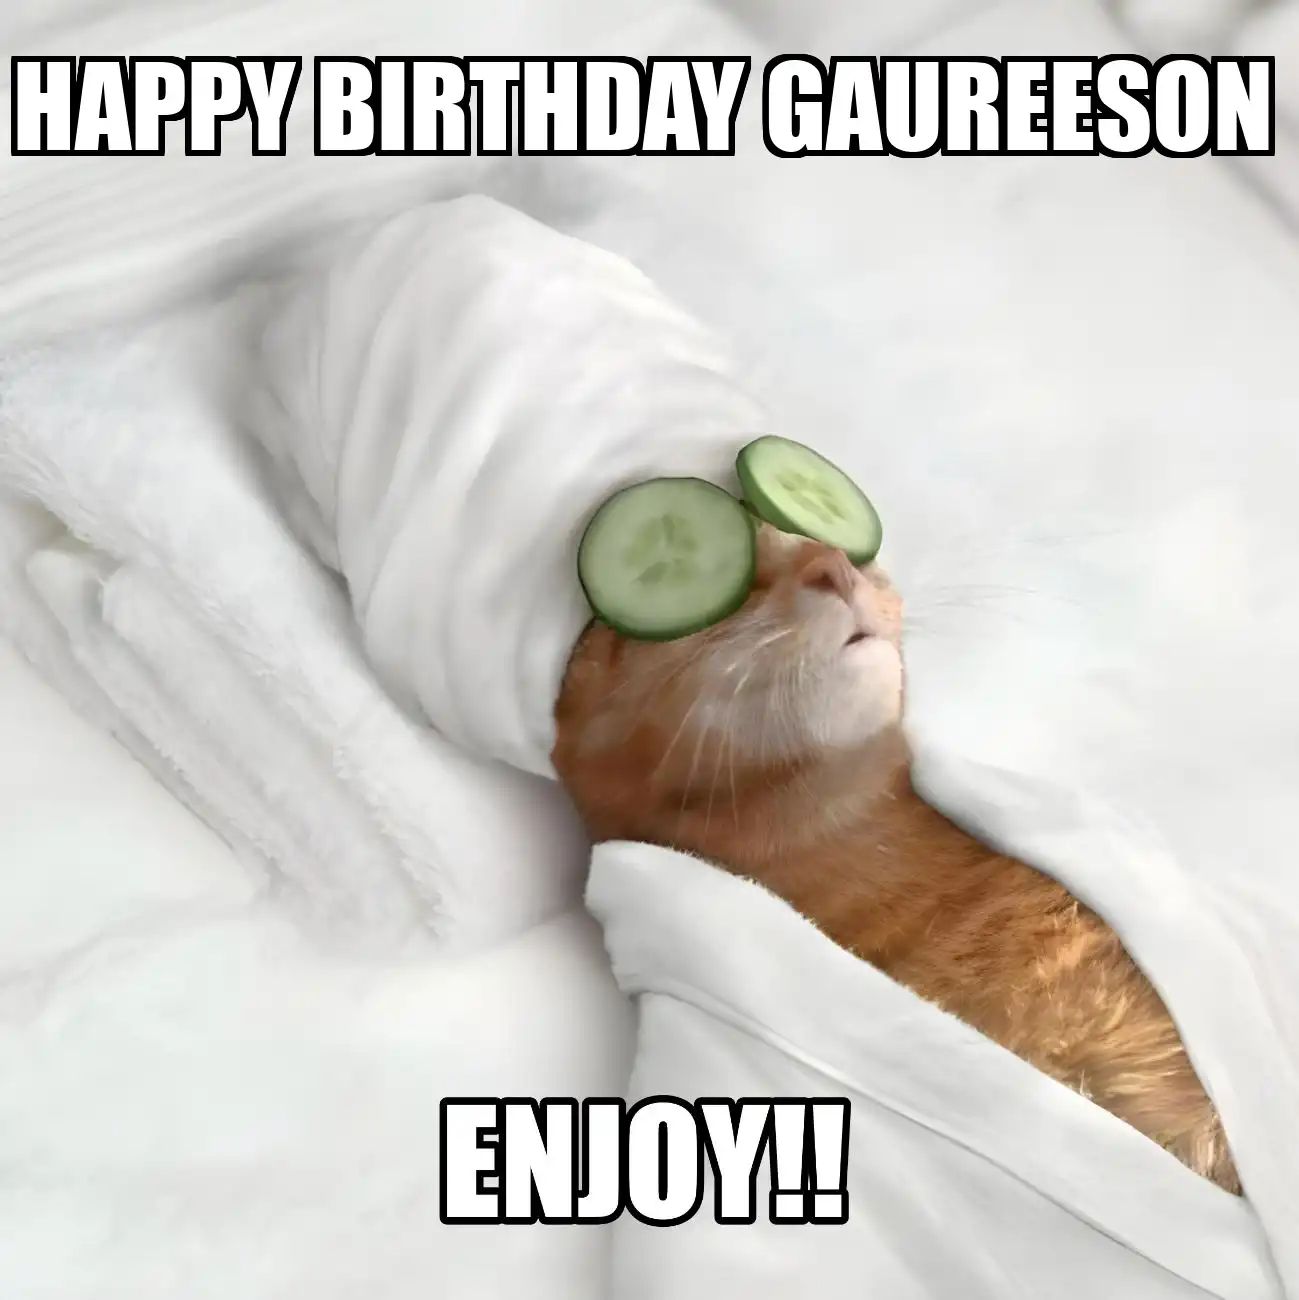 Happy Birthday Gaureeson Enjoy Cat Meme